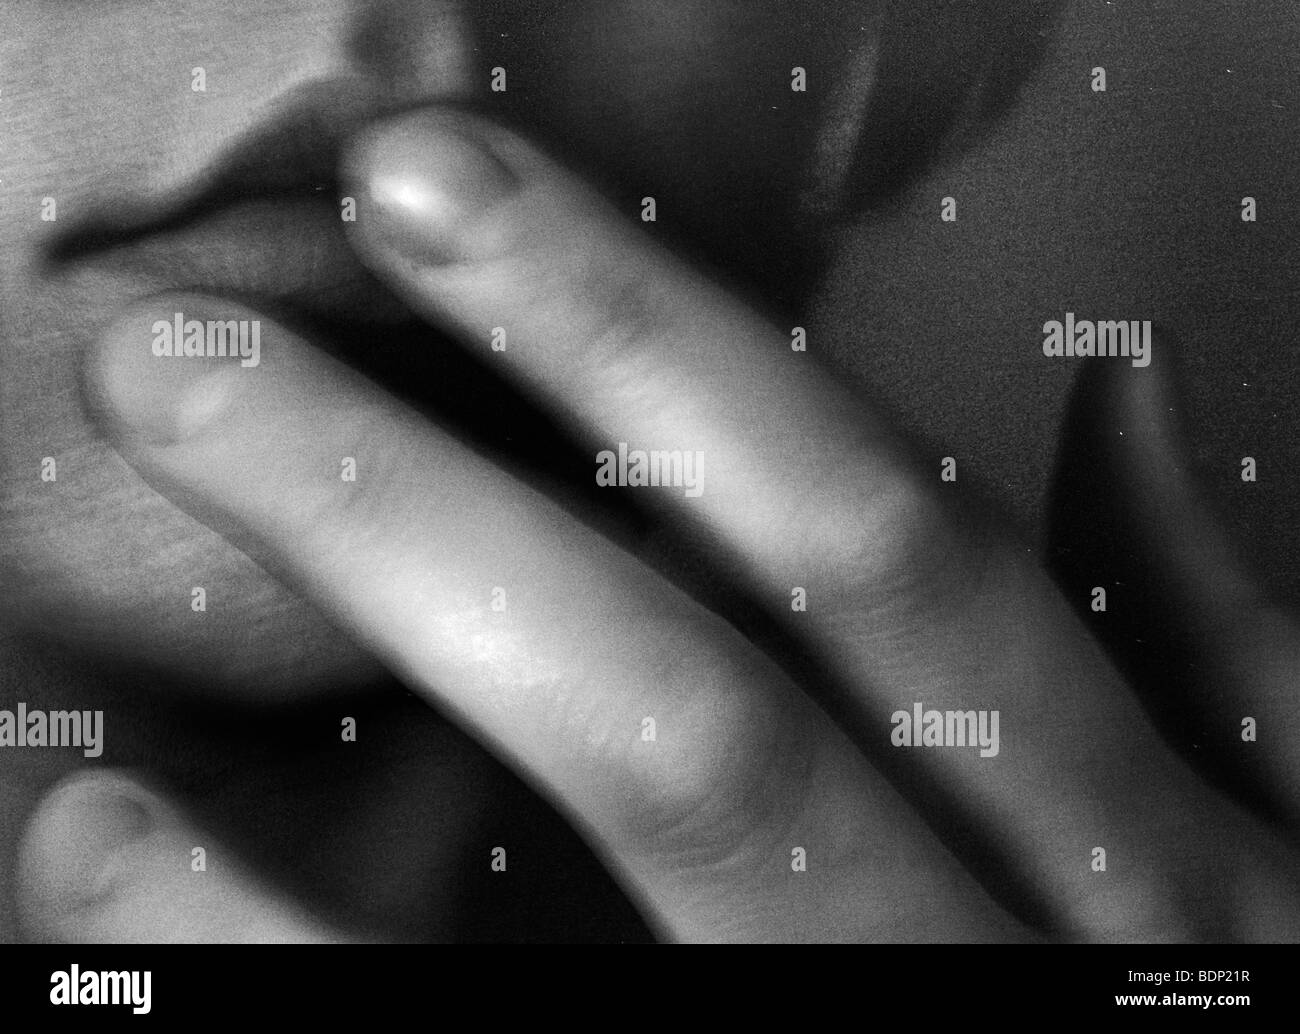 Fingers touching a woman's lips Stock Photo